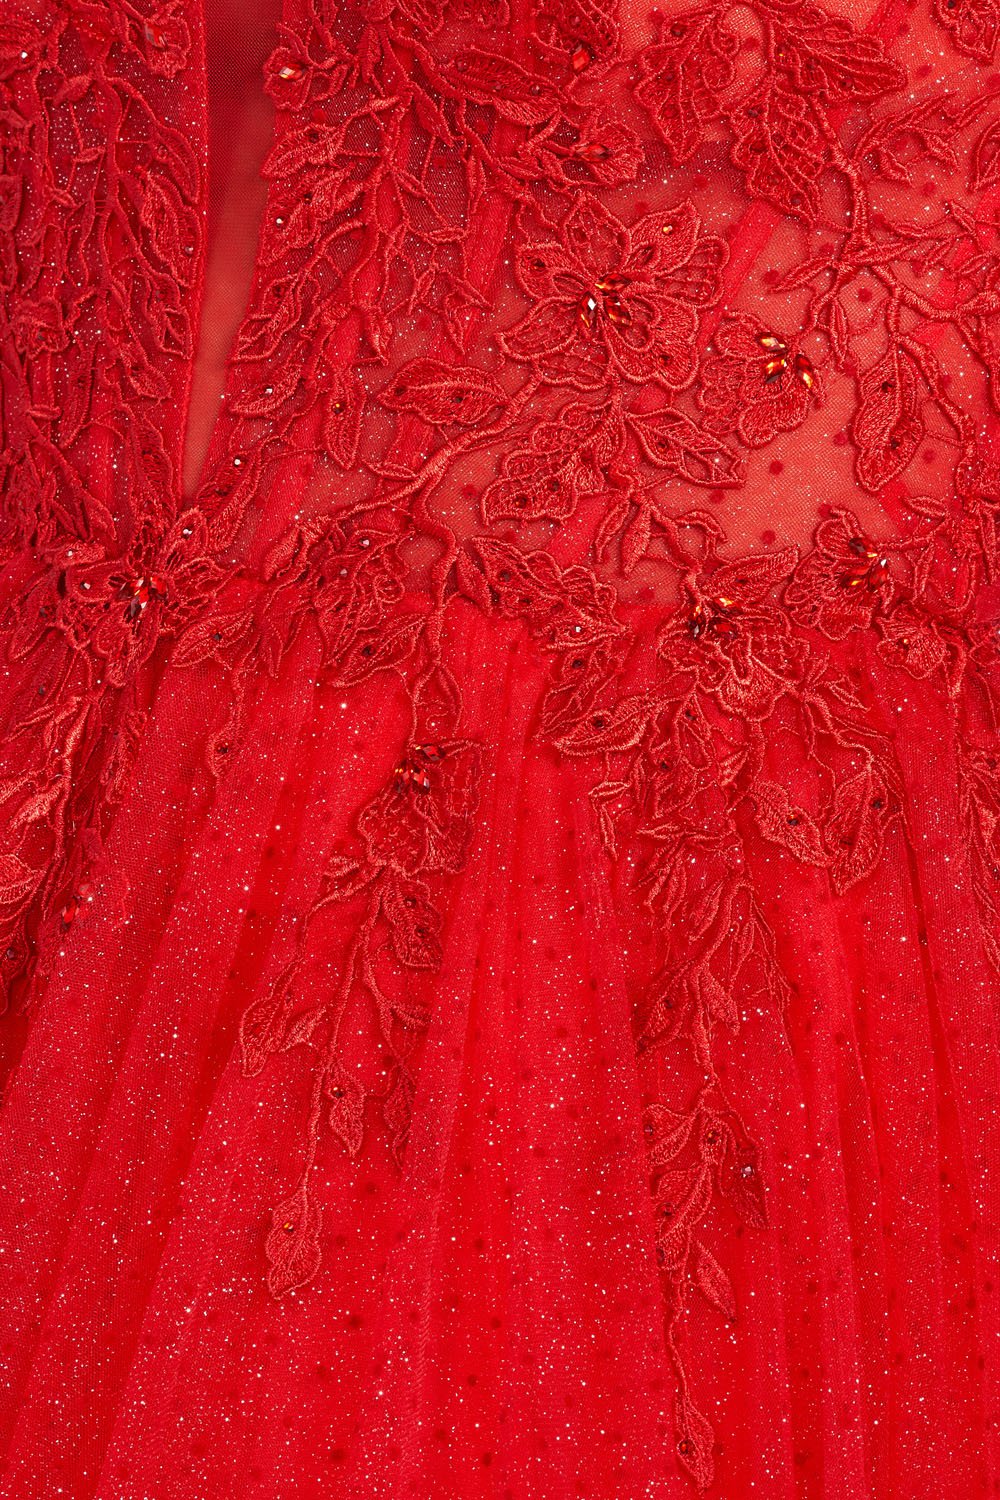 Ellie Wilde Red EW122049 Prom Dress Image.  Red formal dress.